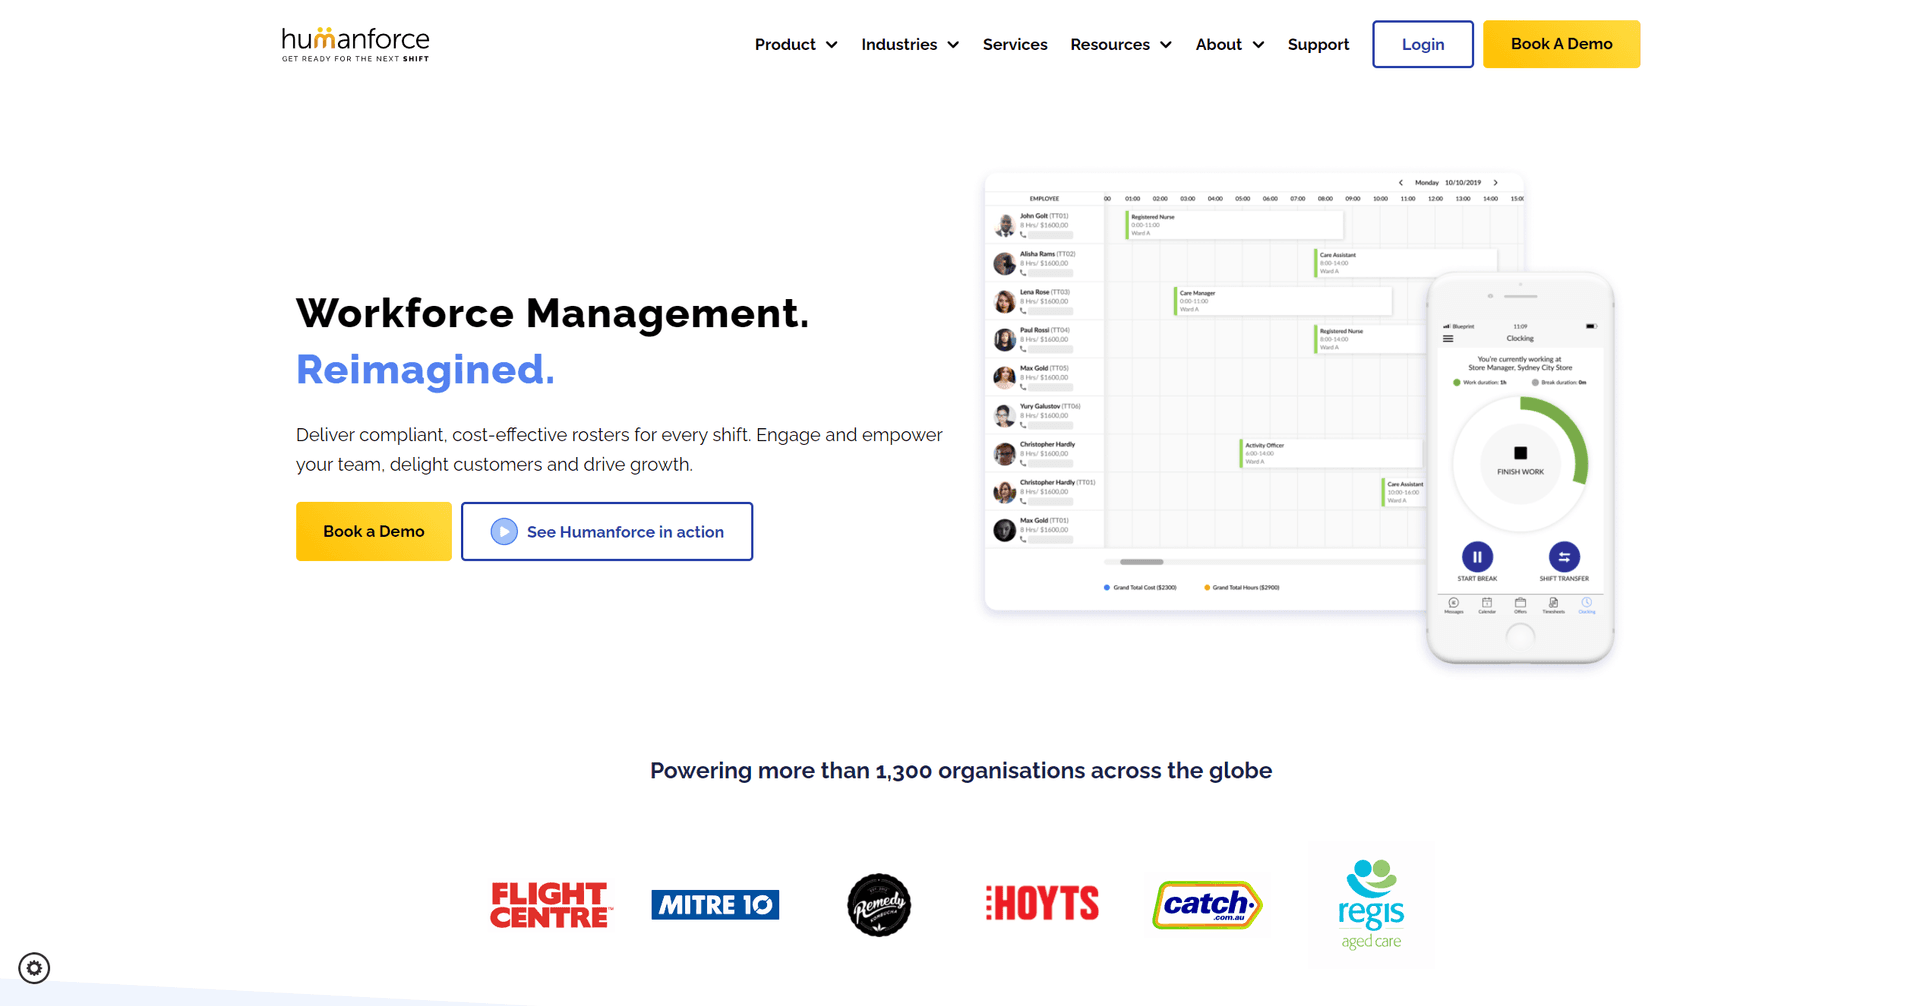 humanforce homepage